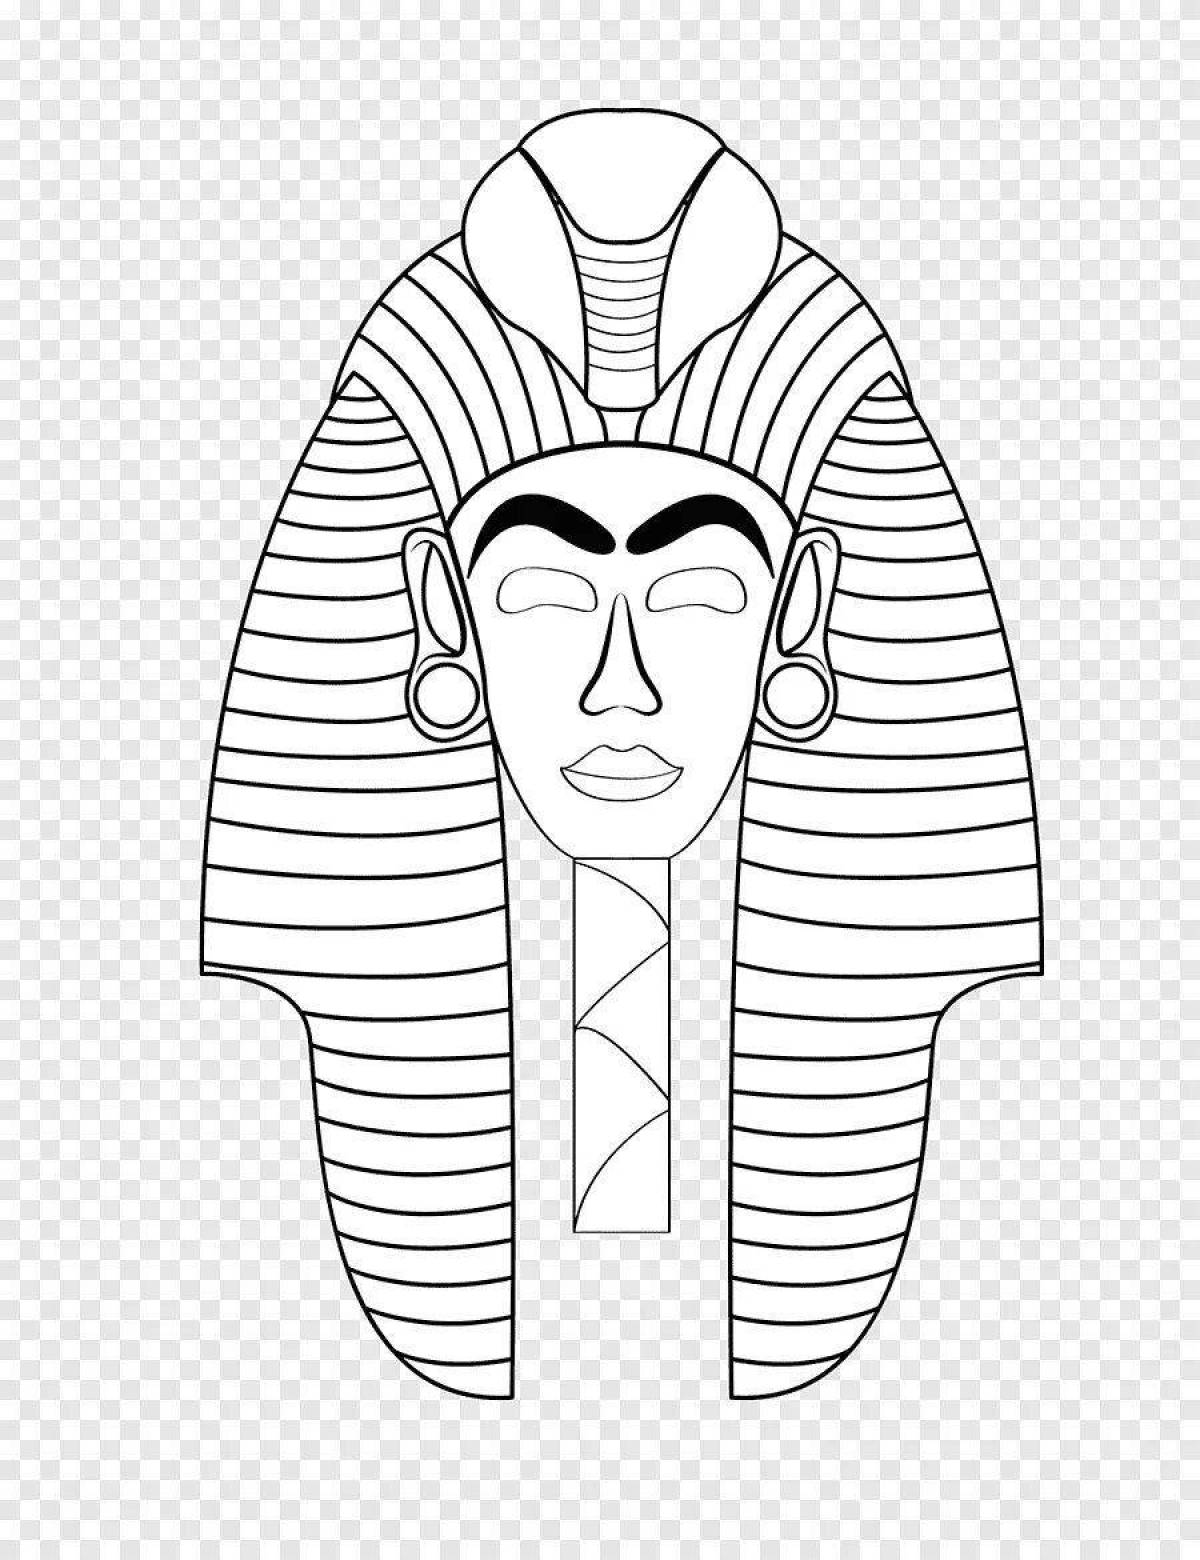 Coloring page intriguing pharaoh mask